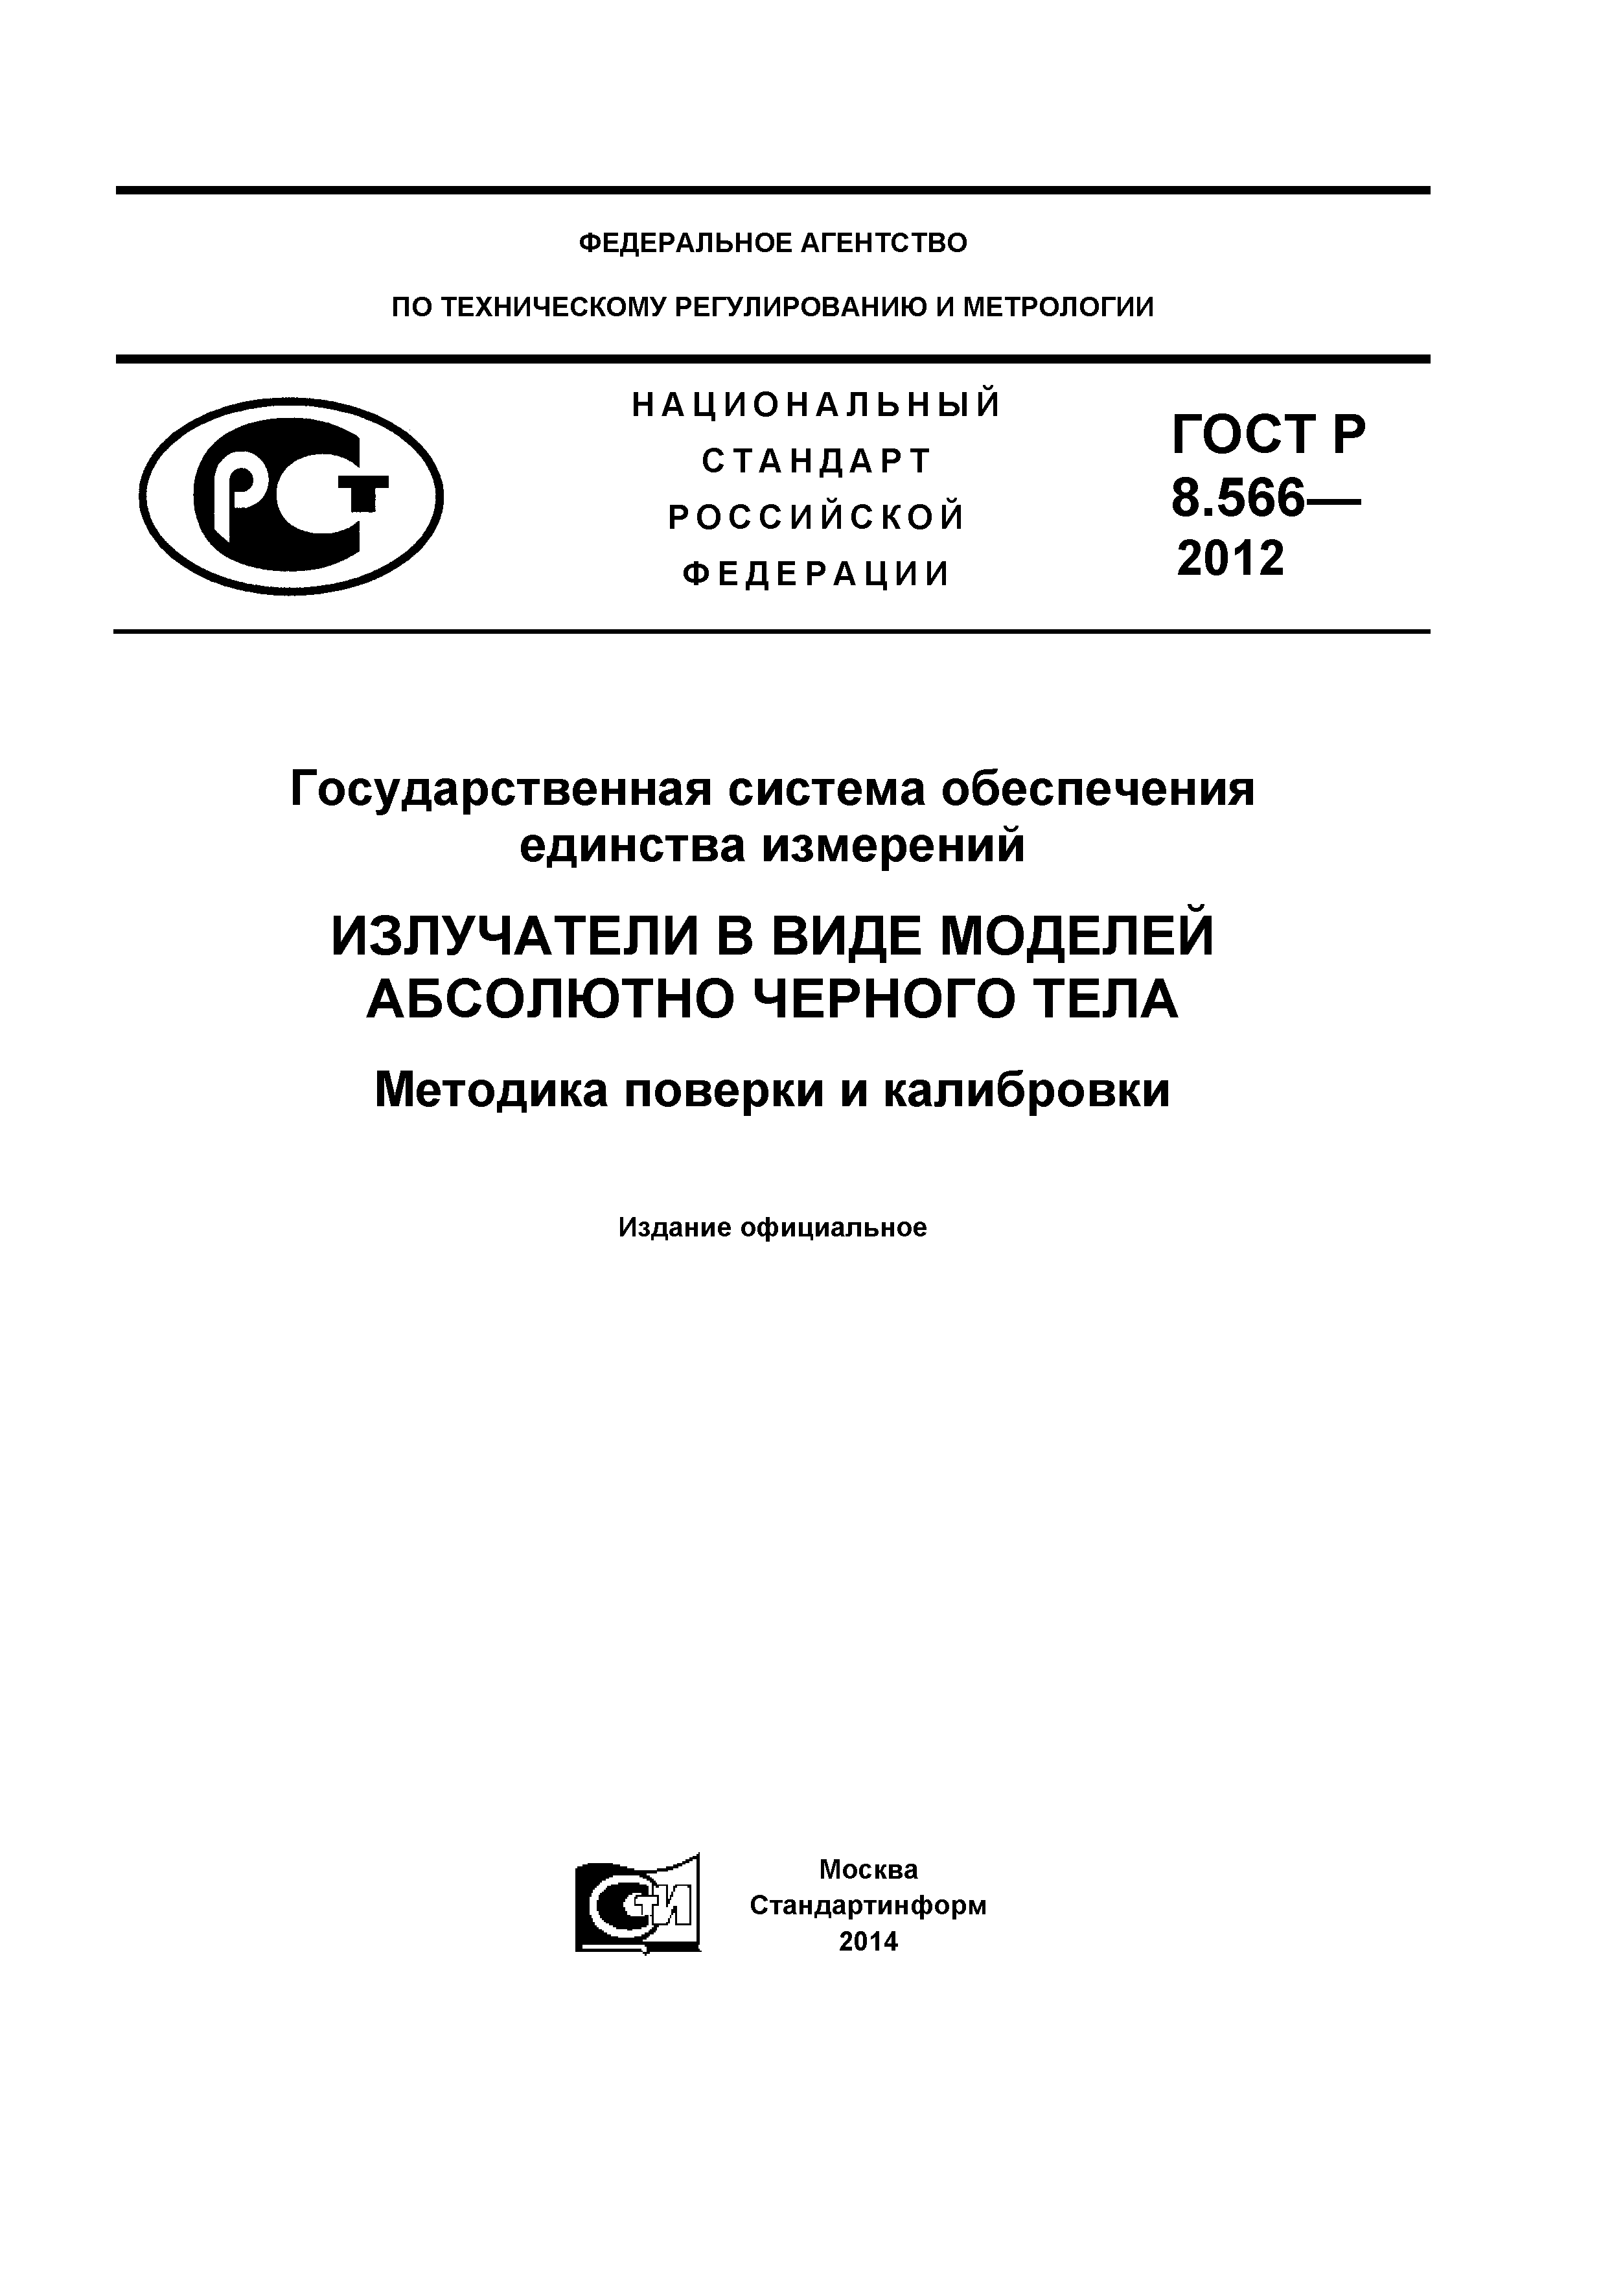 ГОСТ Р 8.566-2012